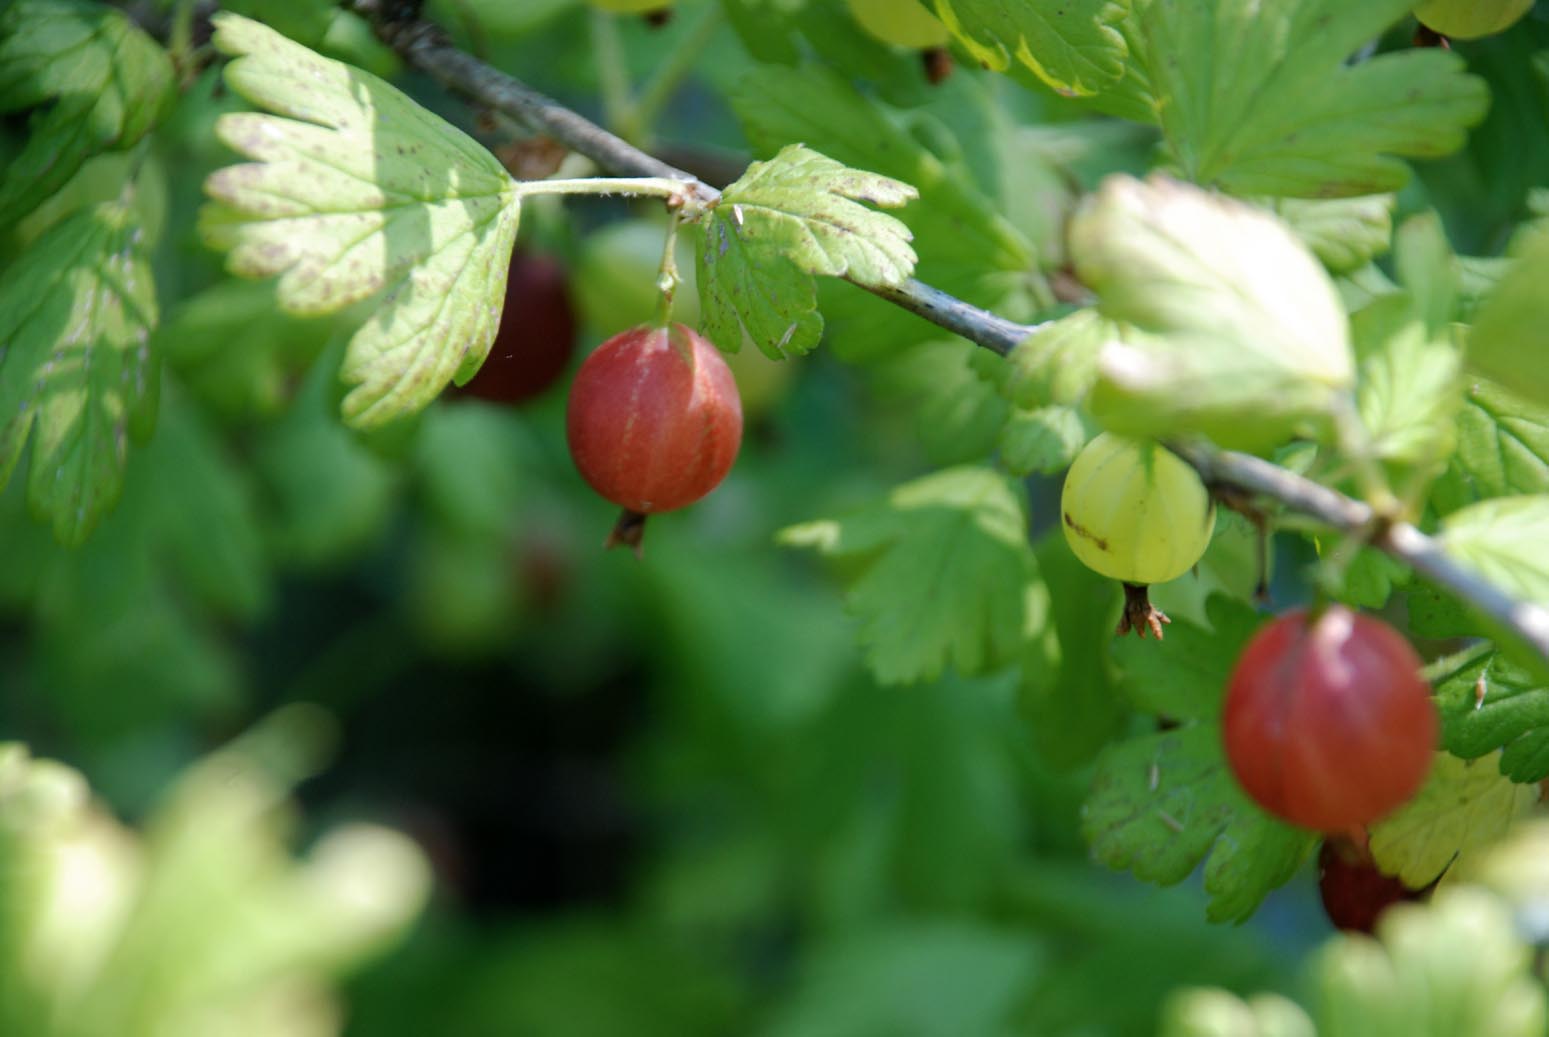 Applegarth Farm: berries in the garden